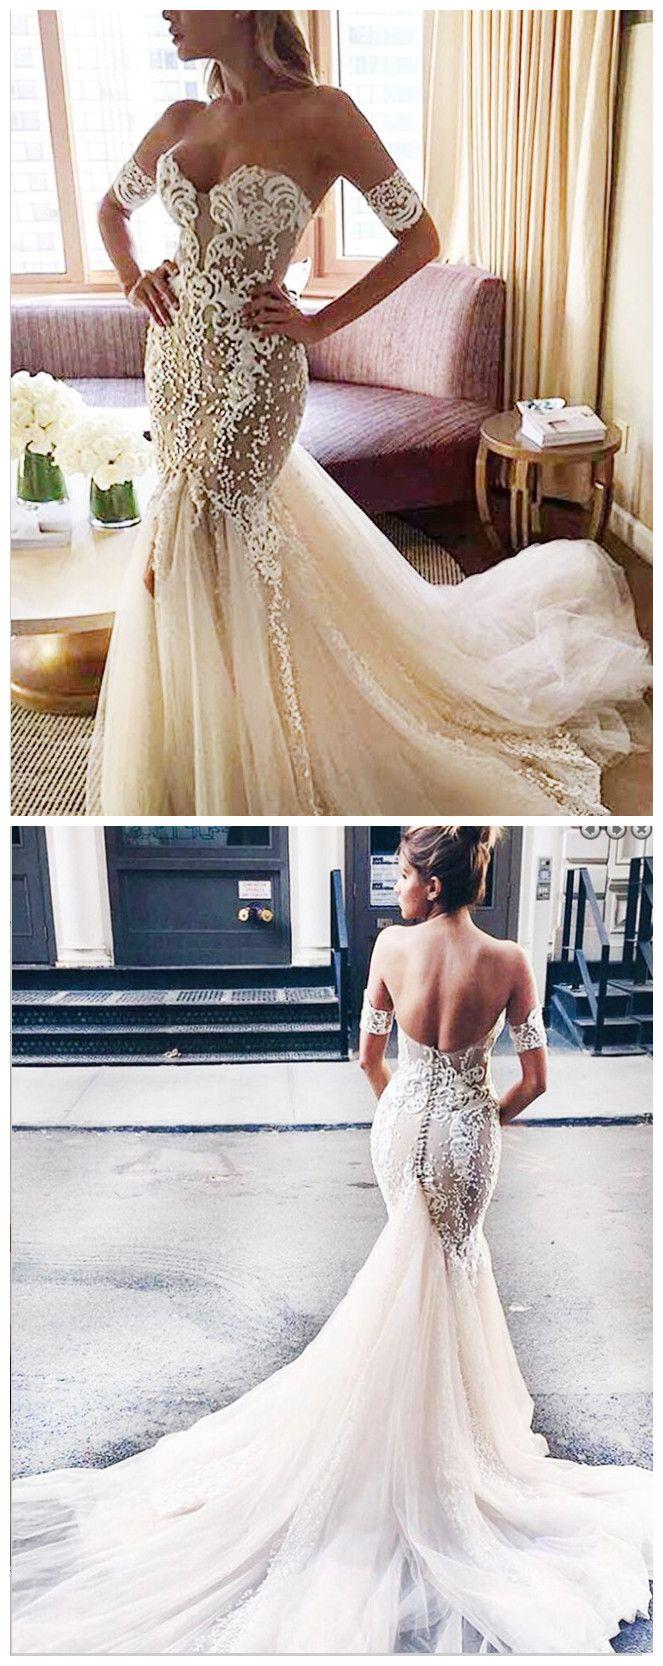 Wedding - Stylish Sweetheart Watteau Train Mermaid Wedding Dress With White Lace From Olesa Wedding Shop